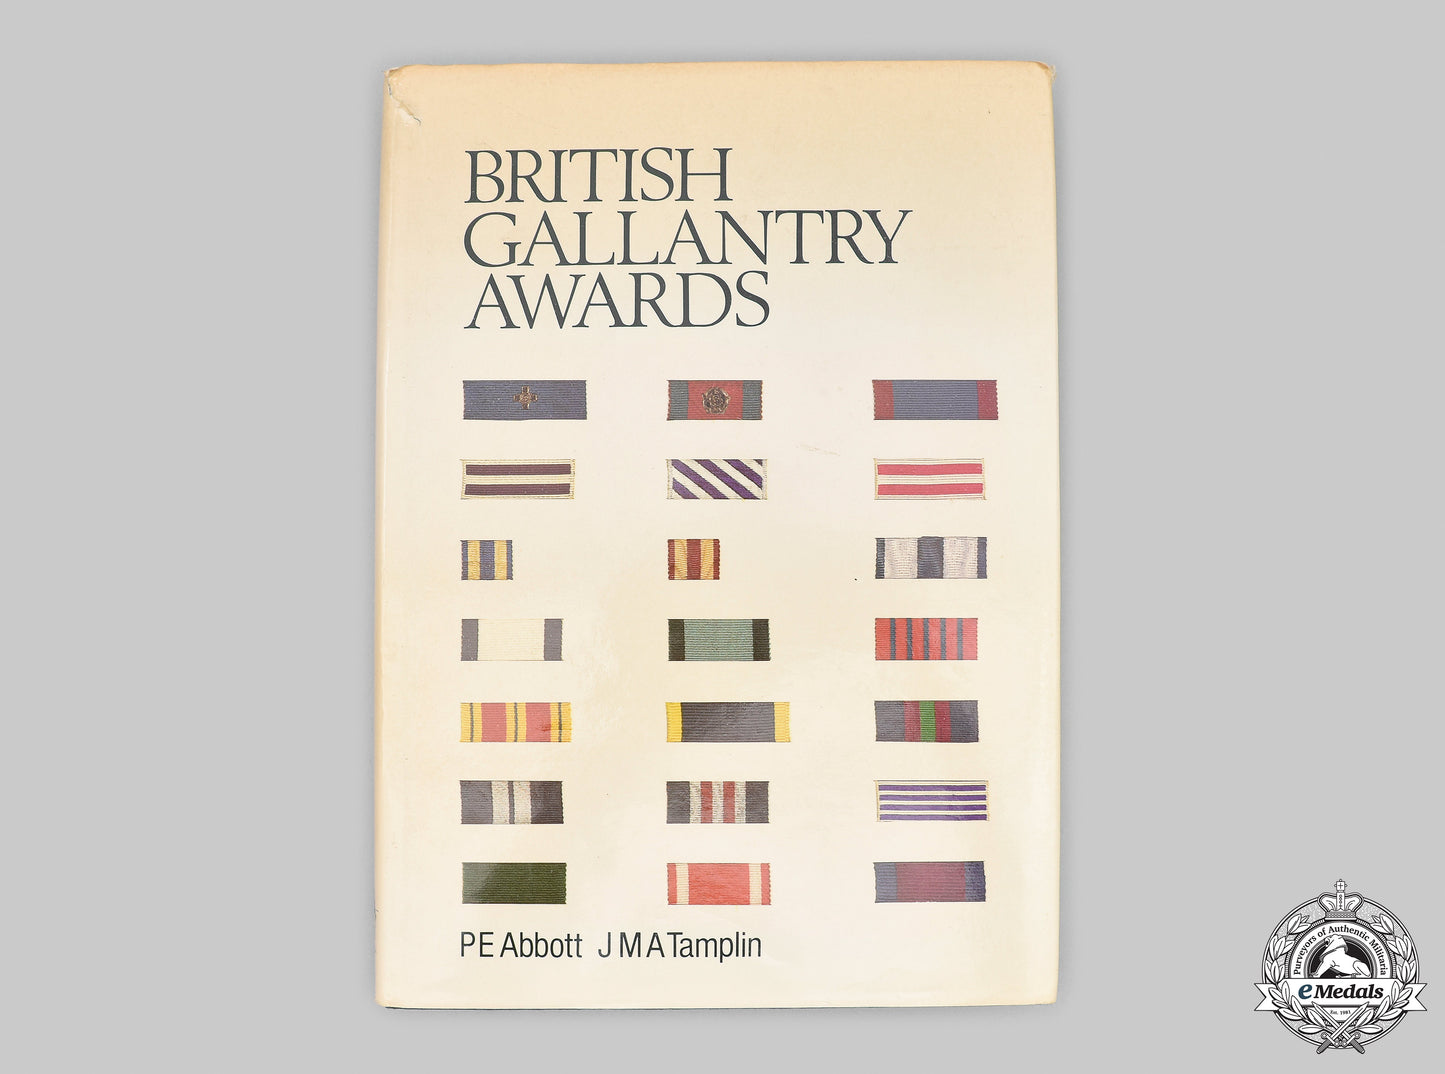 united_kingdom._british_gallantry_awards,_second_edition_m21_0106_mnc5777